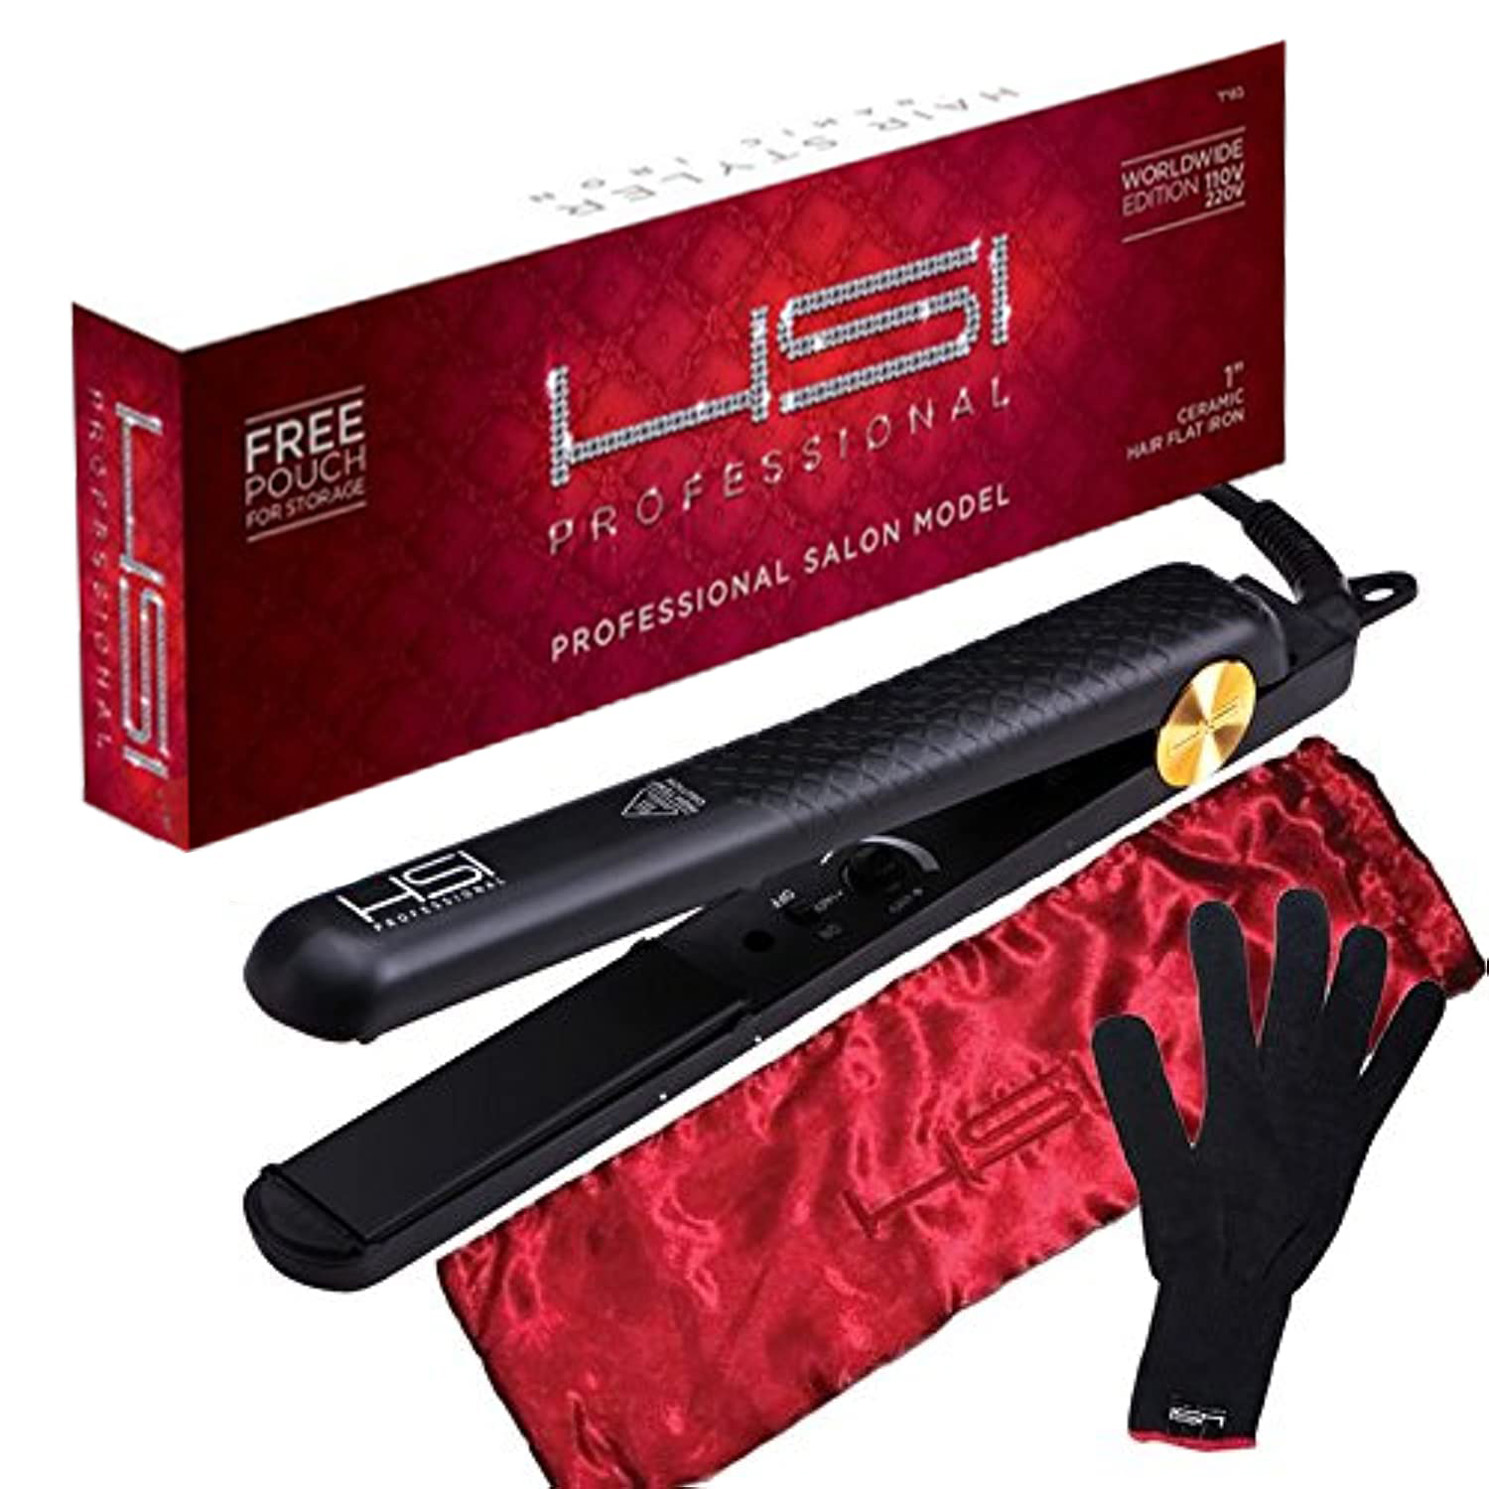 HSI Professional Glider Ceramic Tourmaline Ionic Flat Iron Hair Straightener Straightens